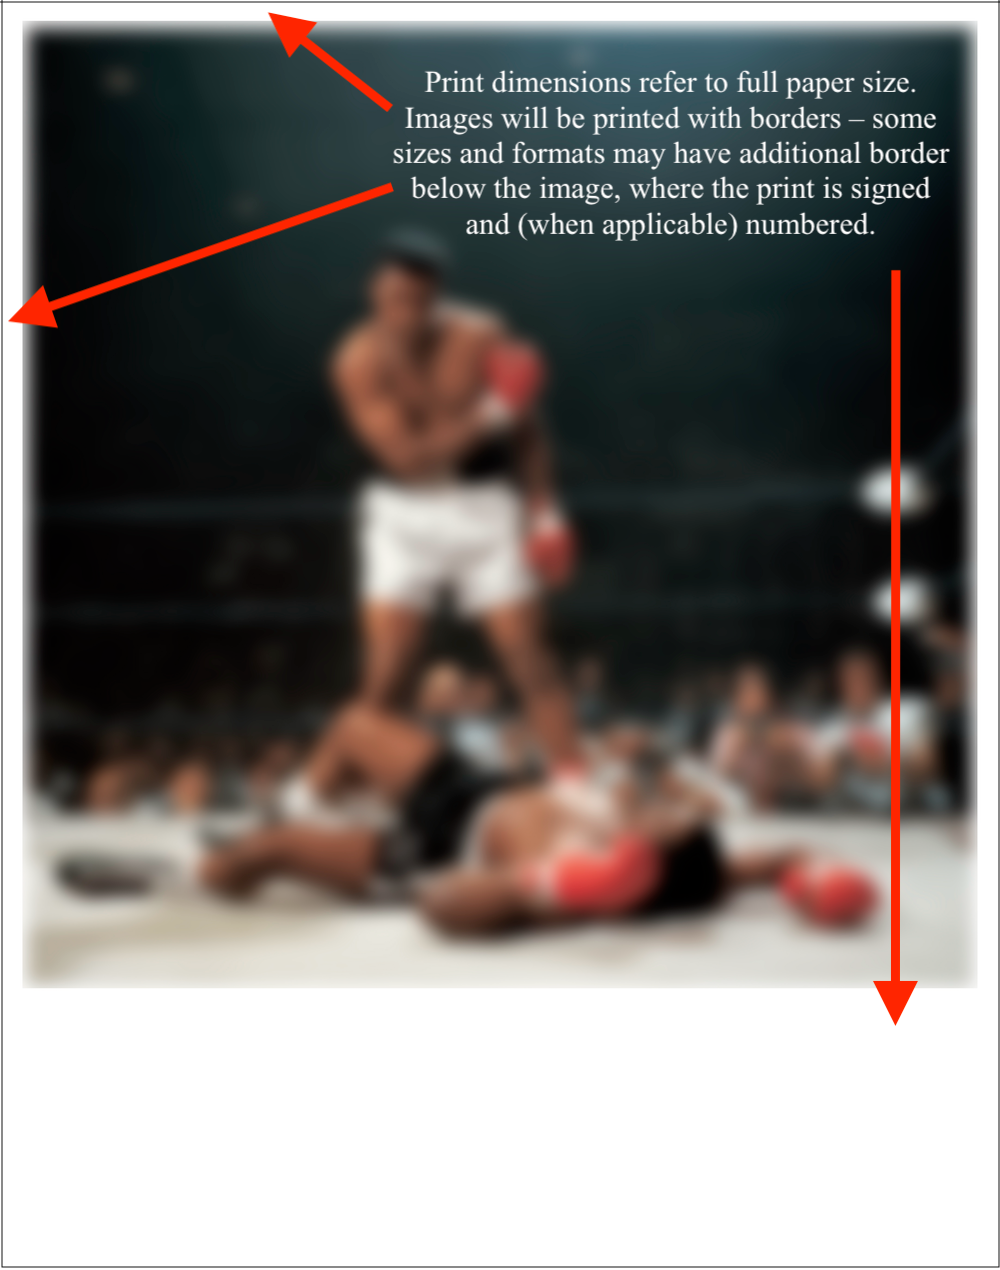 Muhammad Ali vs Cleveland Williams (Aerial)